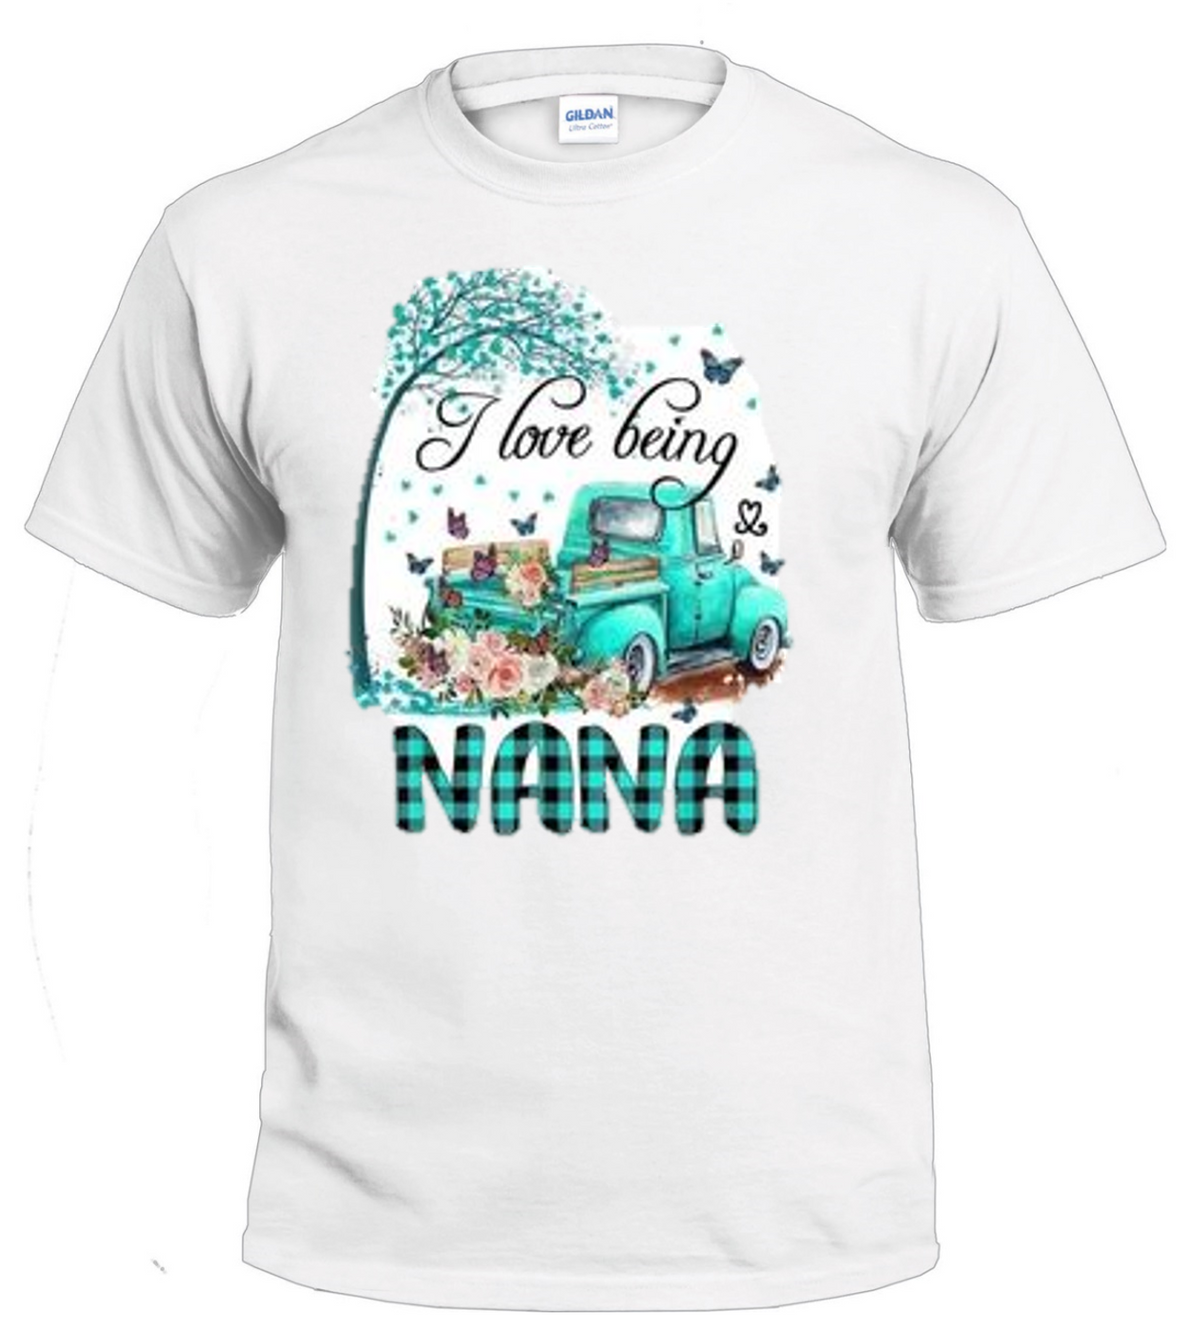 I Love Being a Nana t-shirt